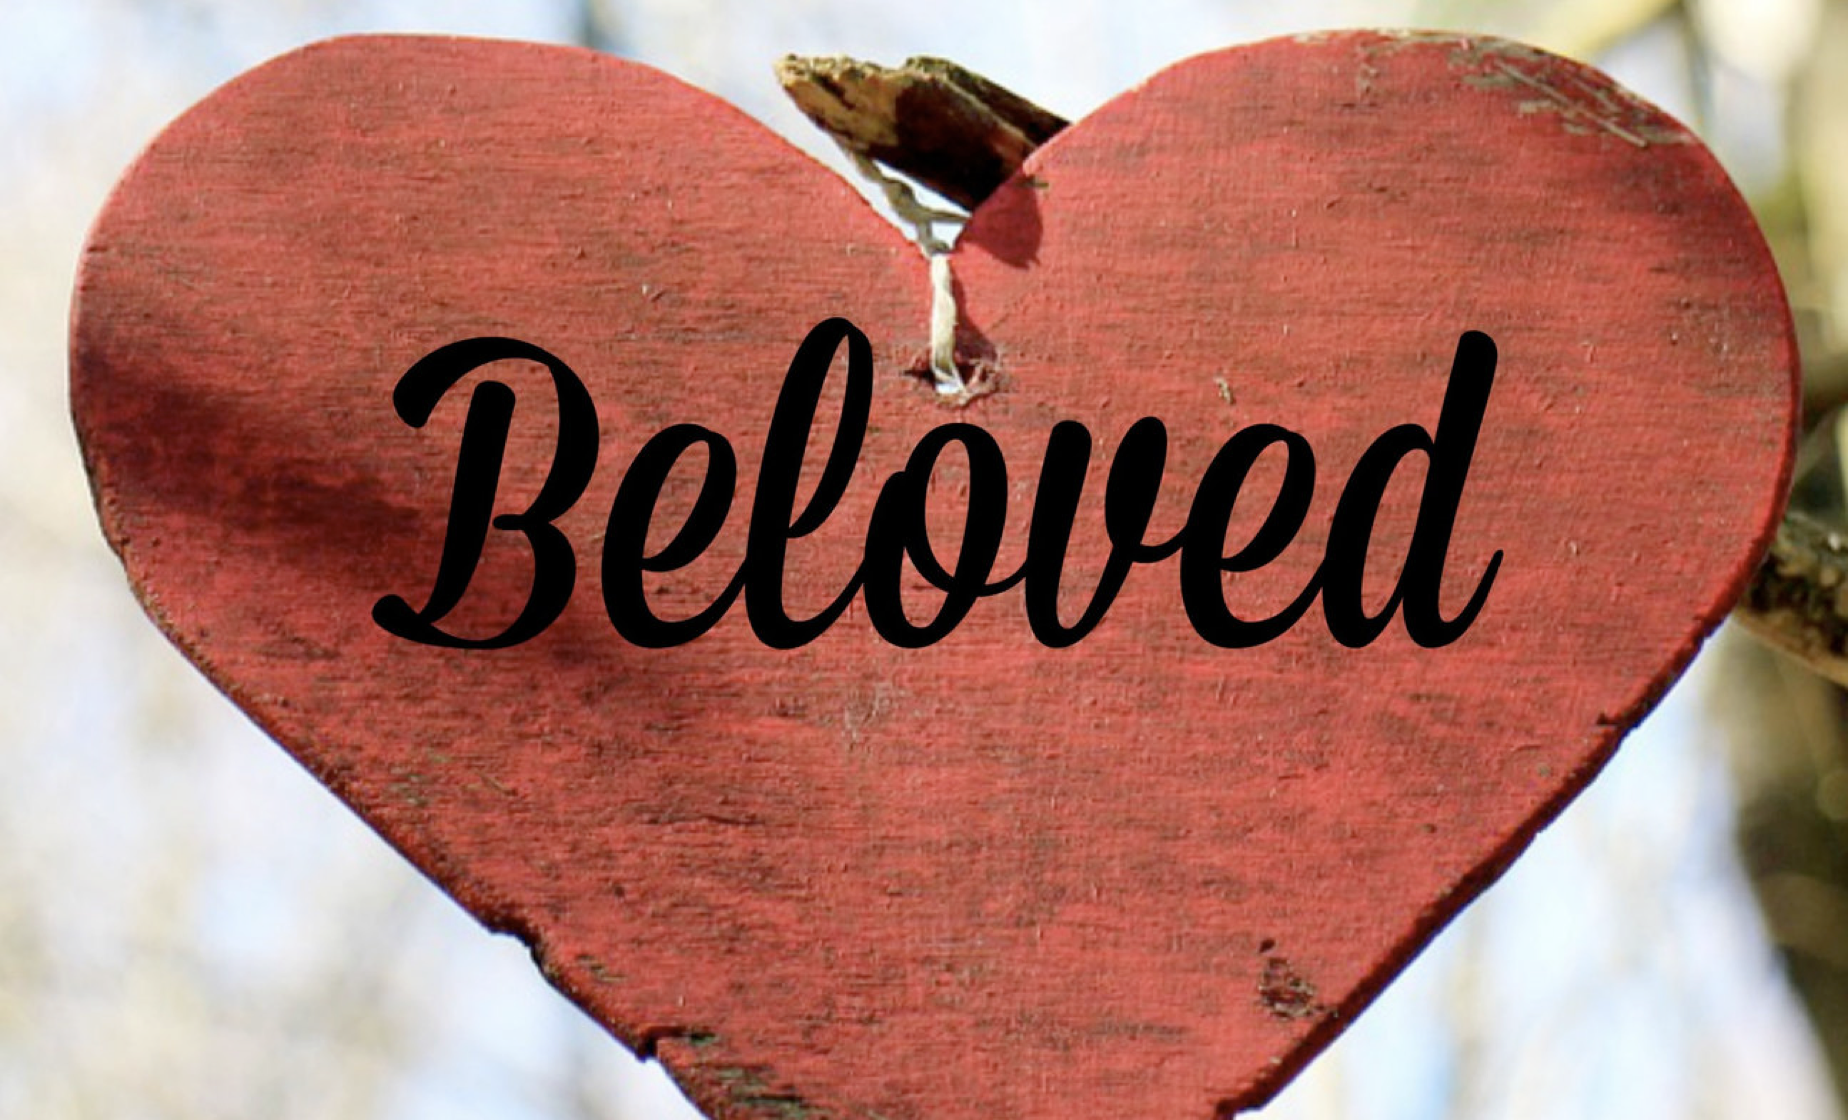 Beloved: Loving What God Loves